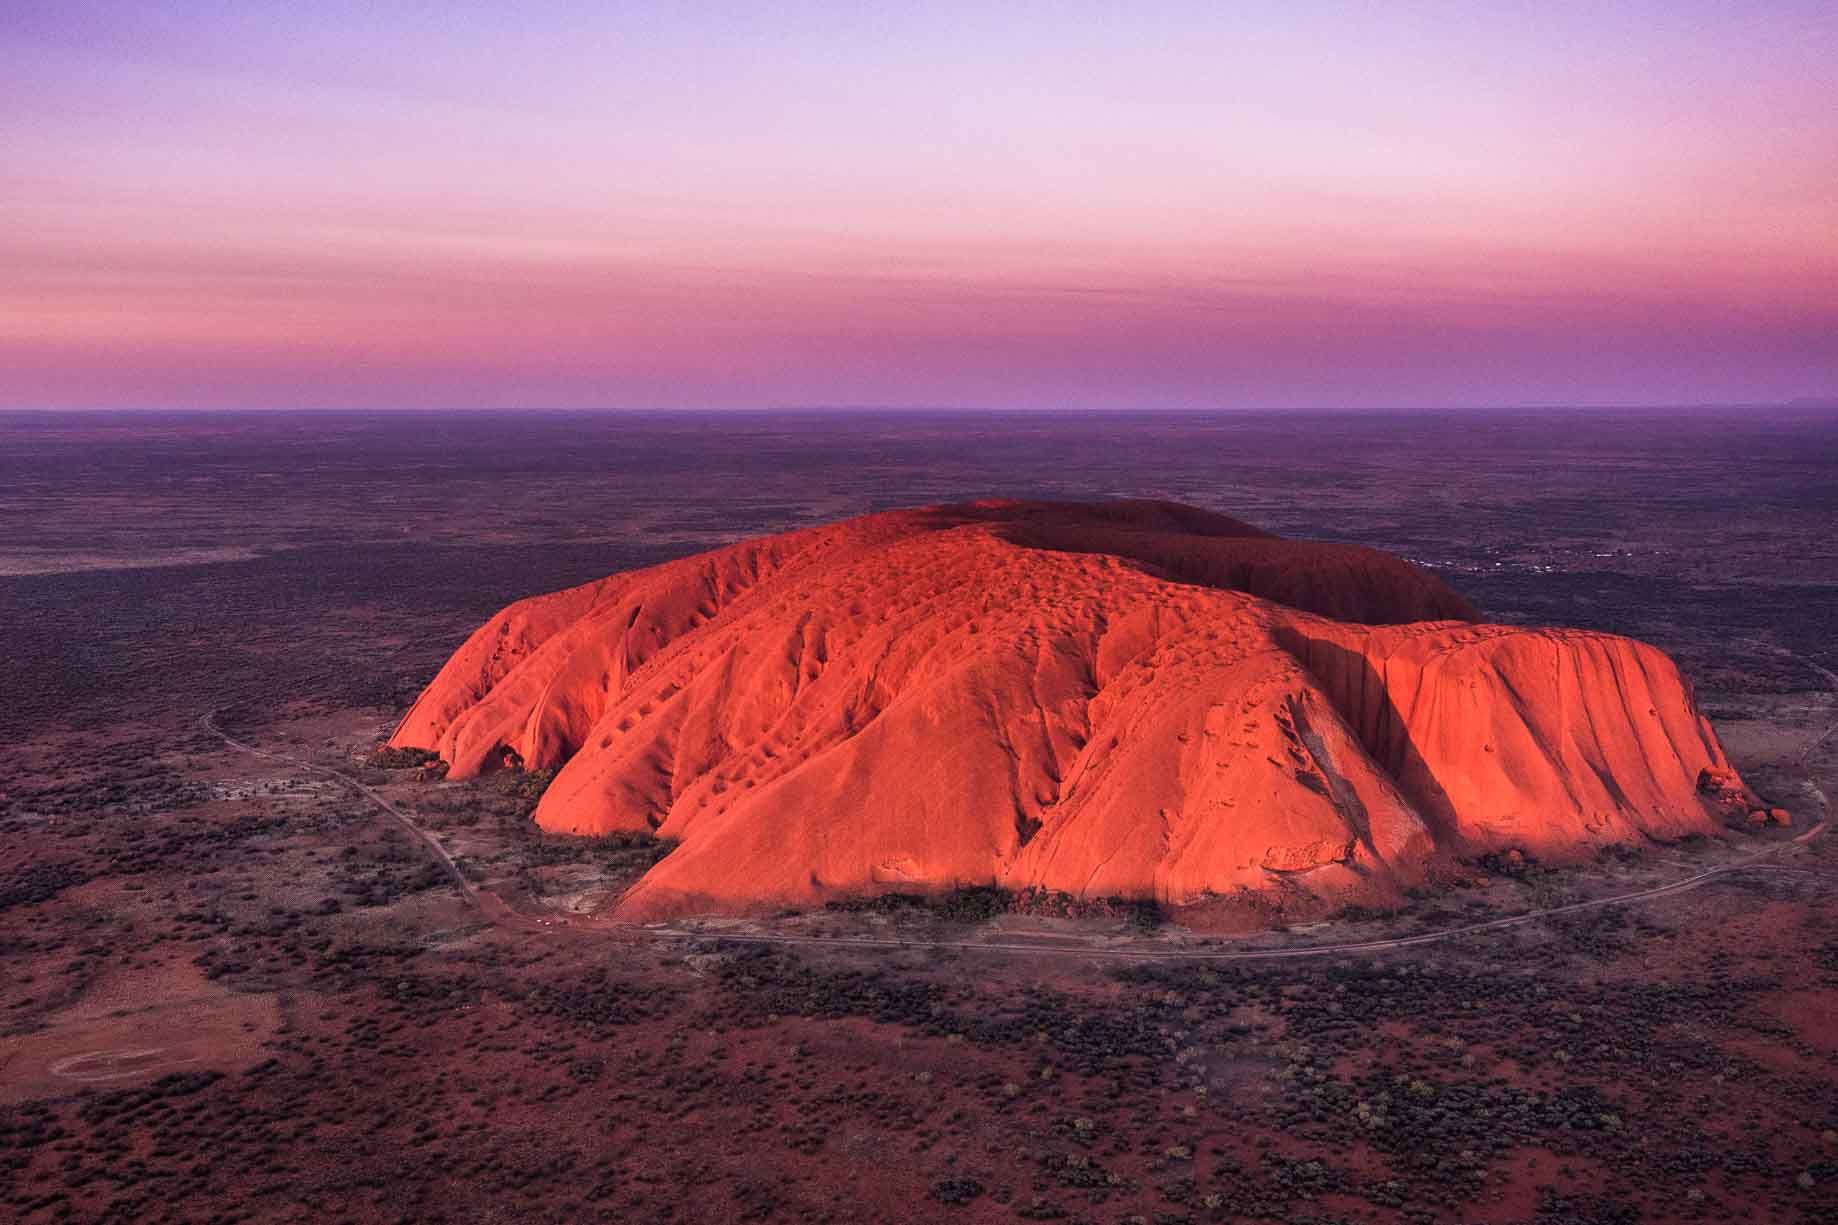 Central Australia - Amazing